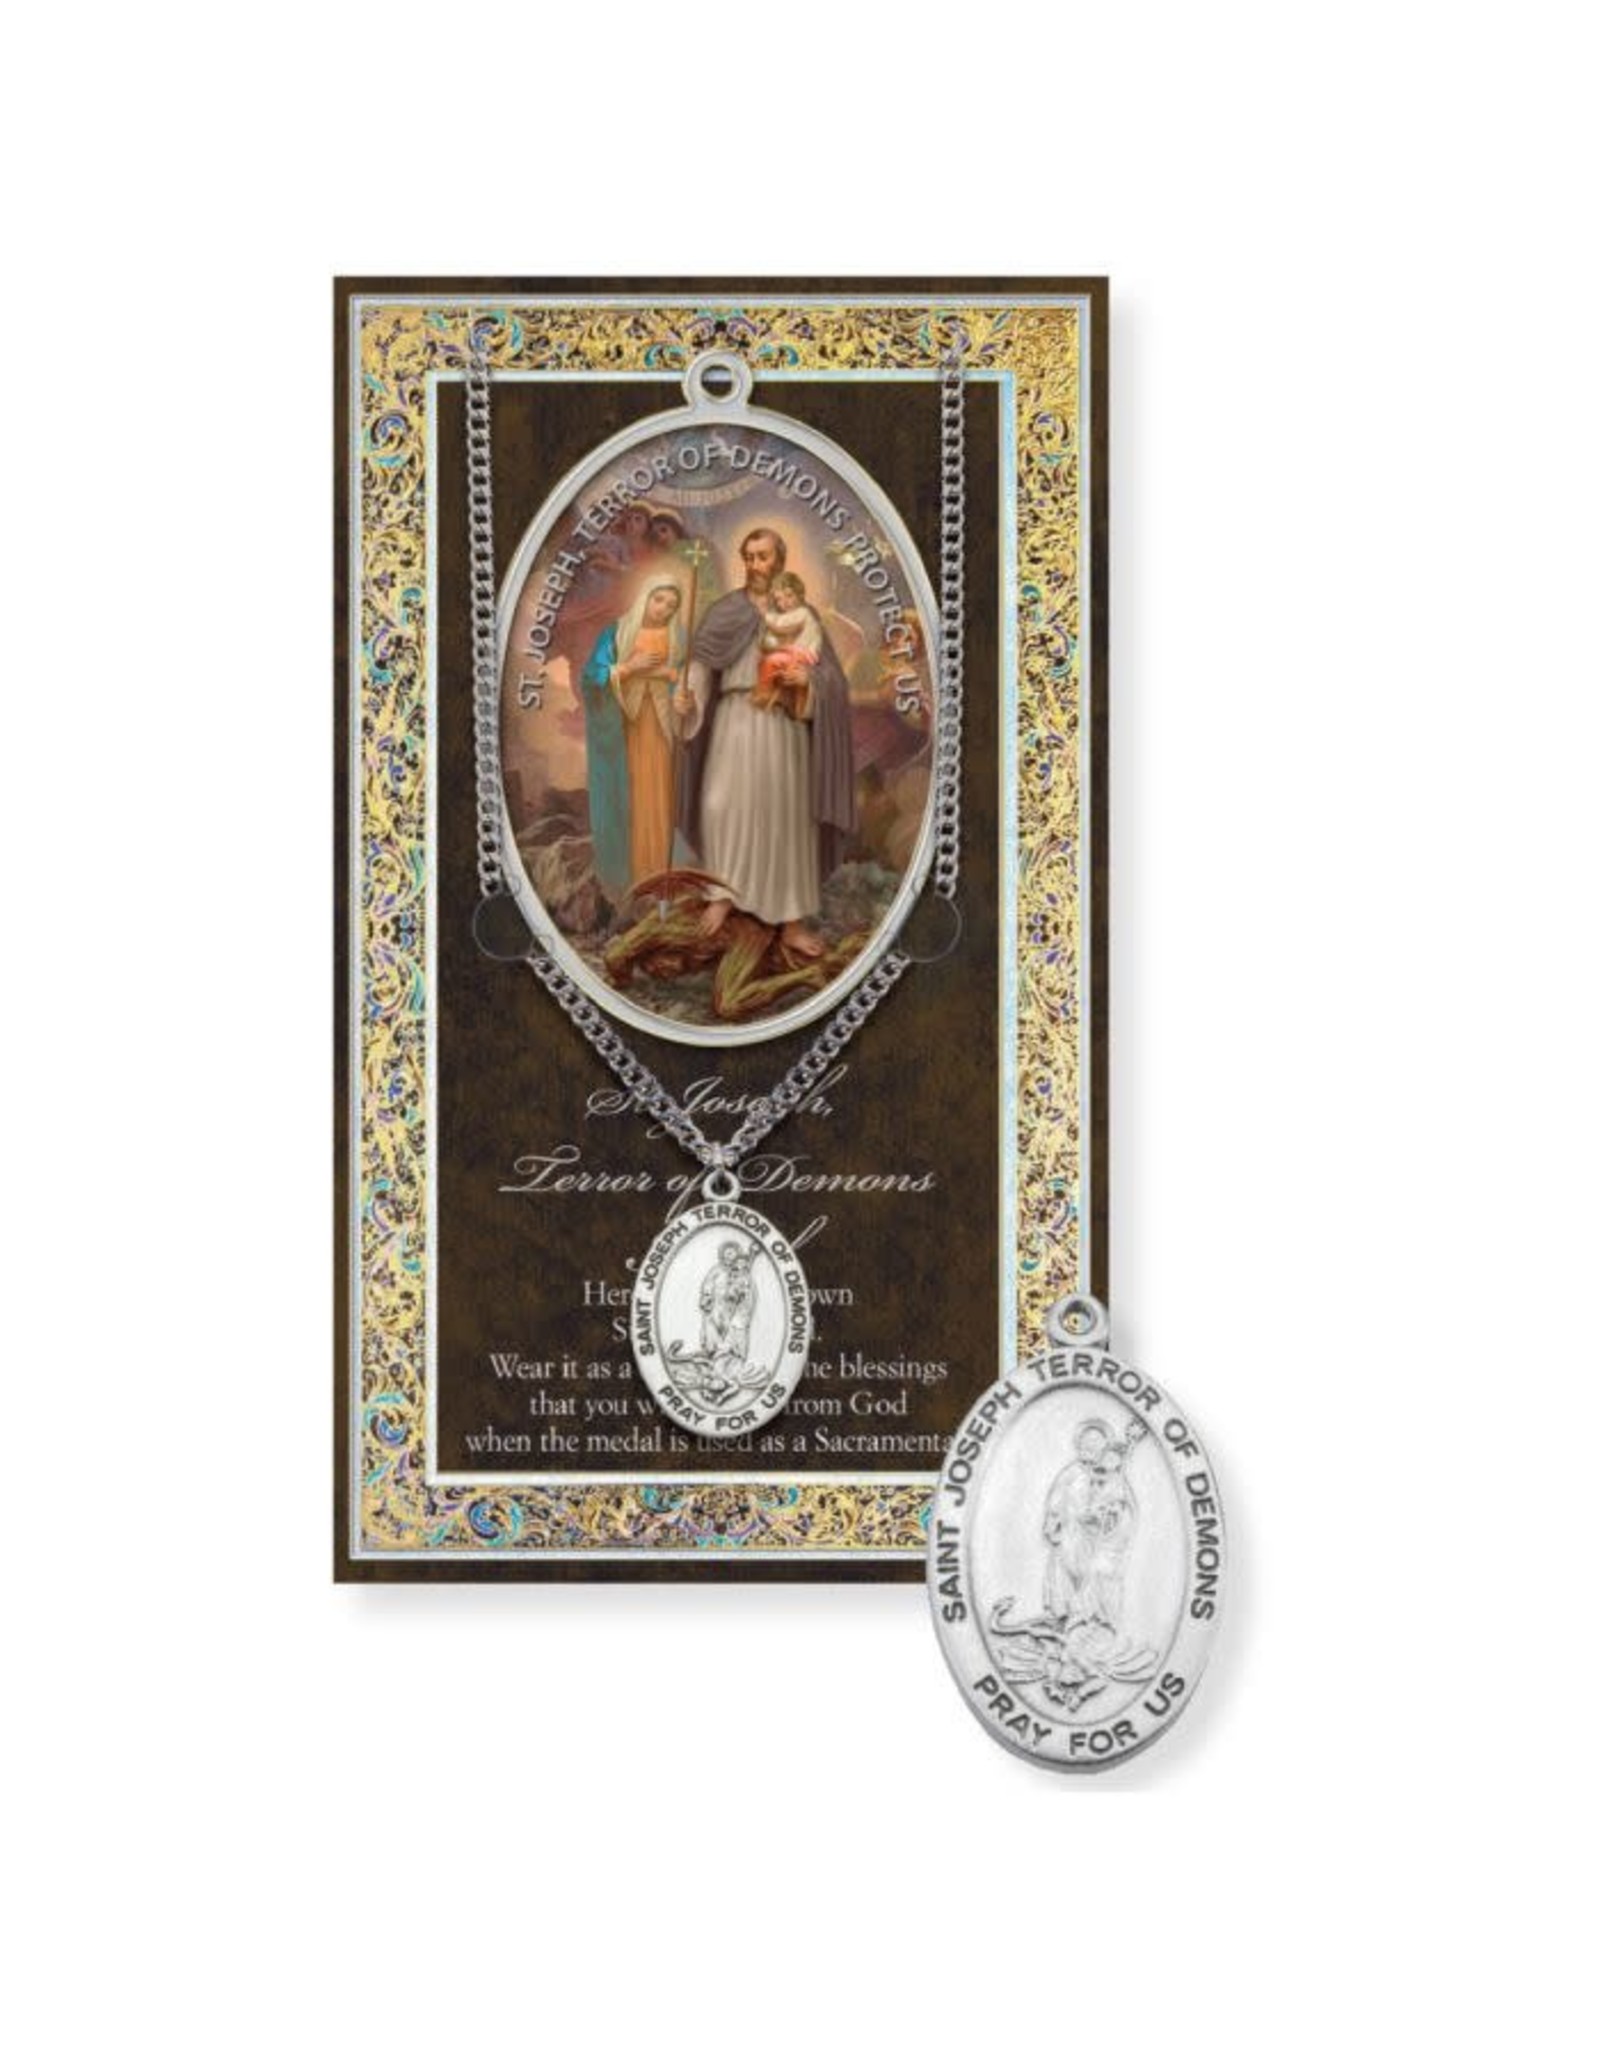 Hirten Saint Medal with Prayer Card - St. Joseph Terror of Demons